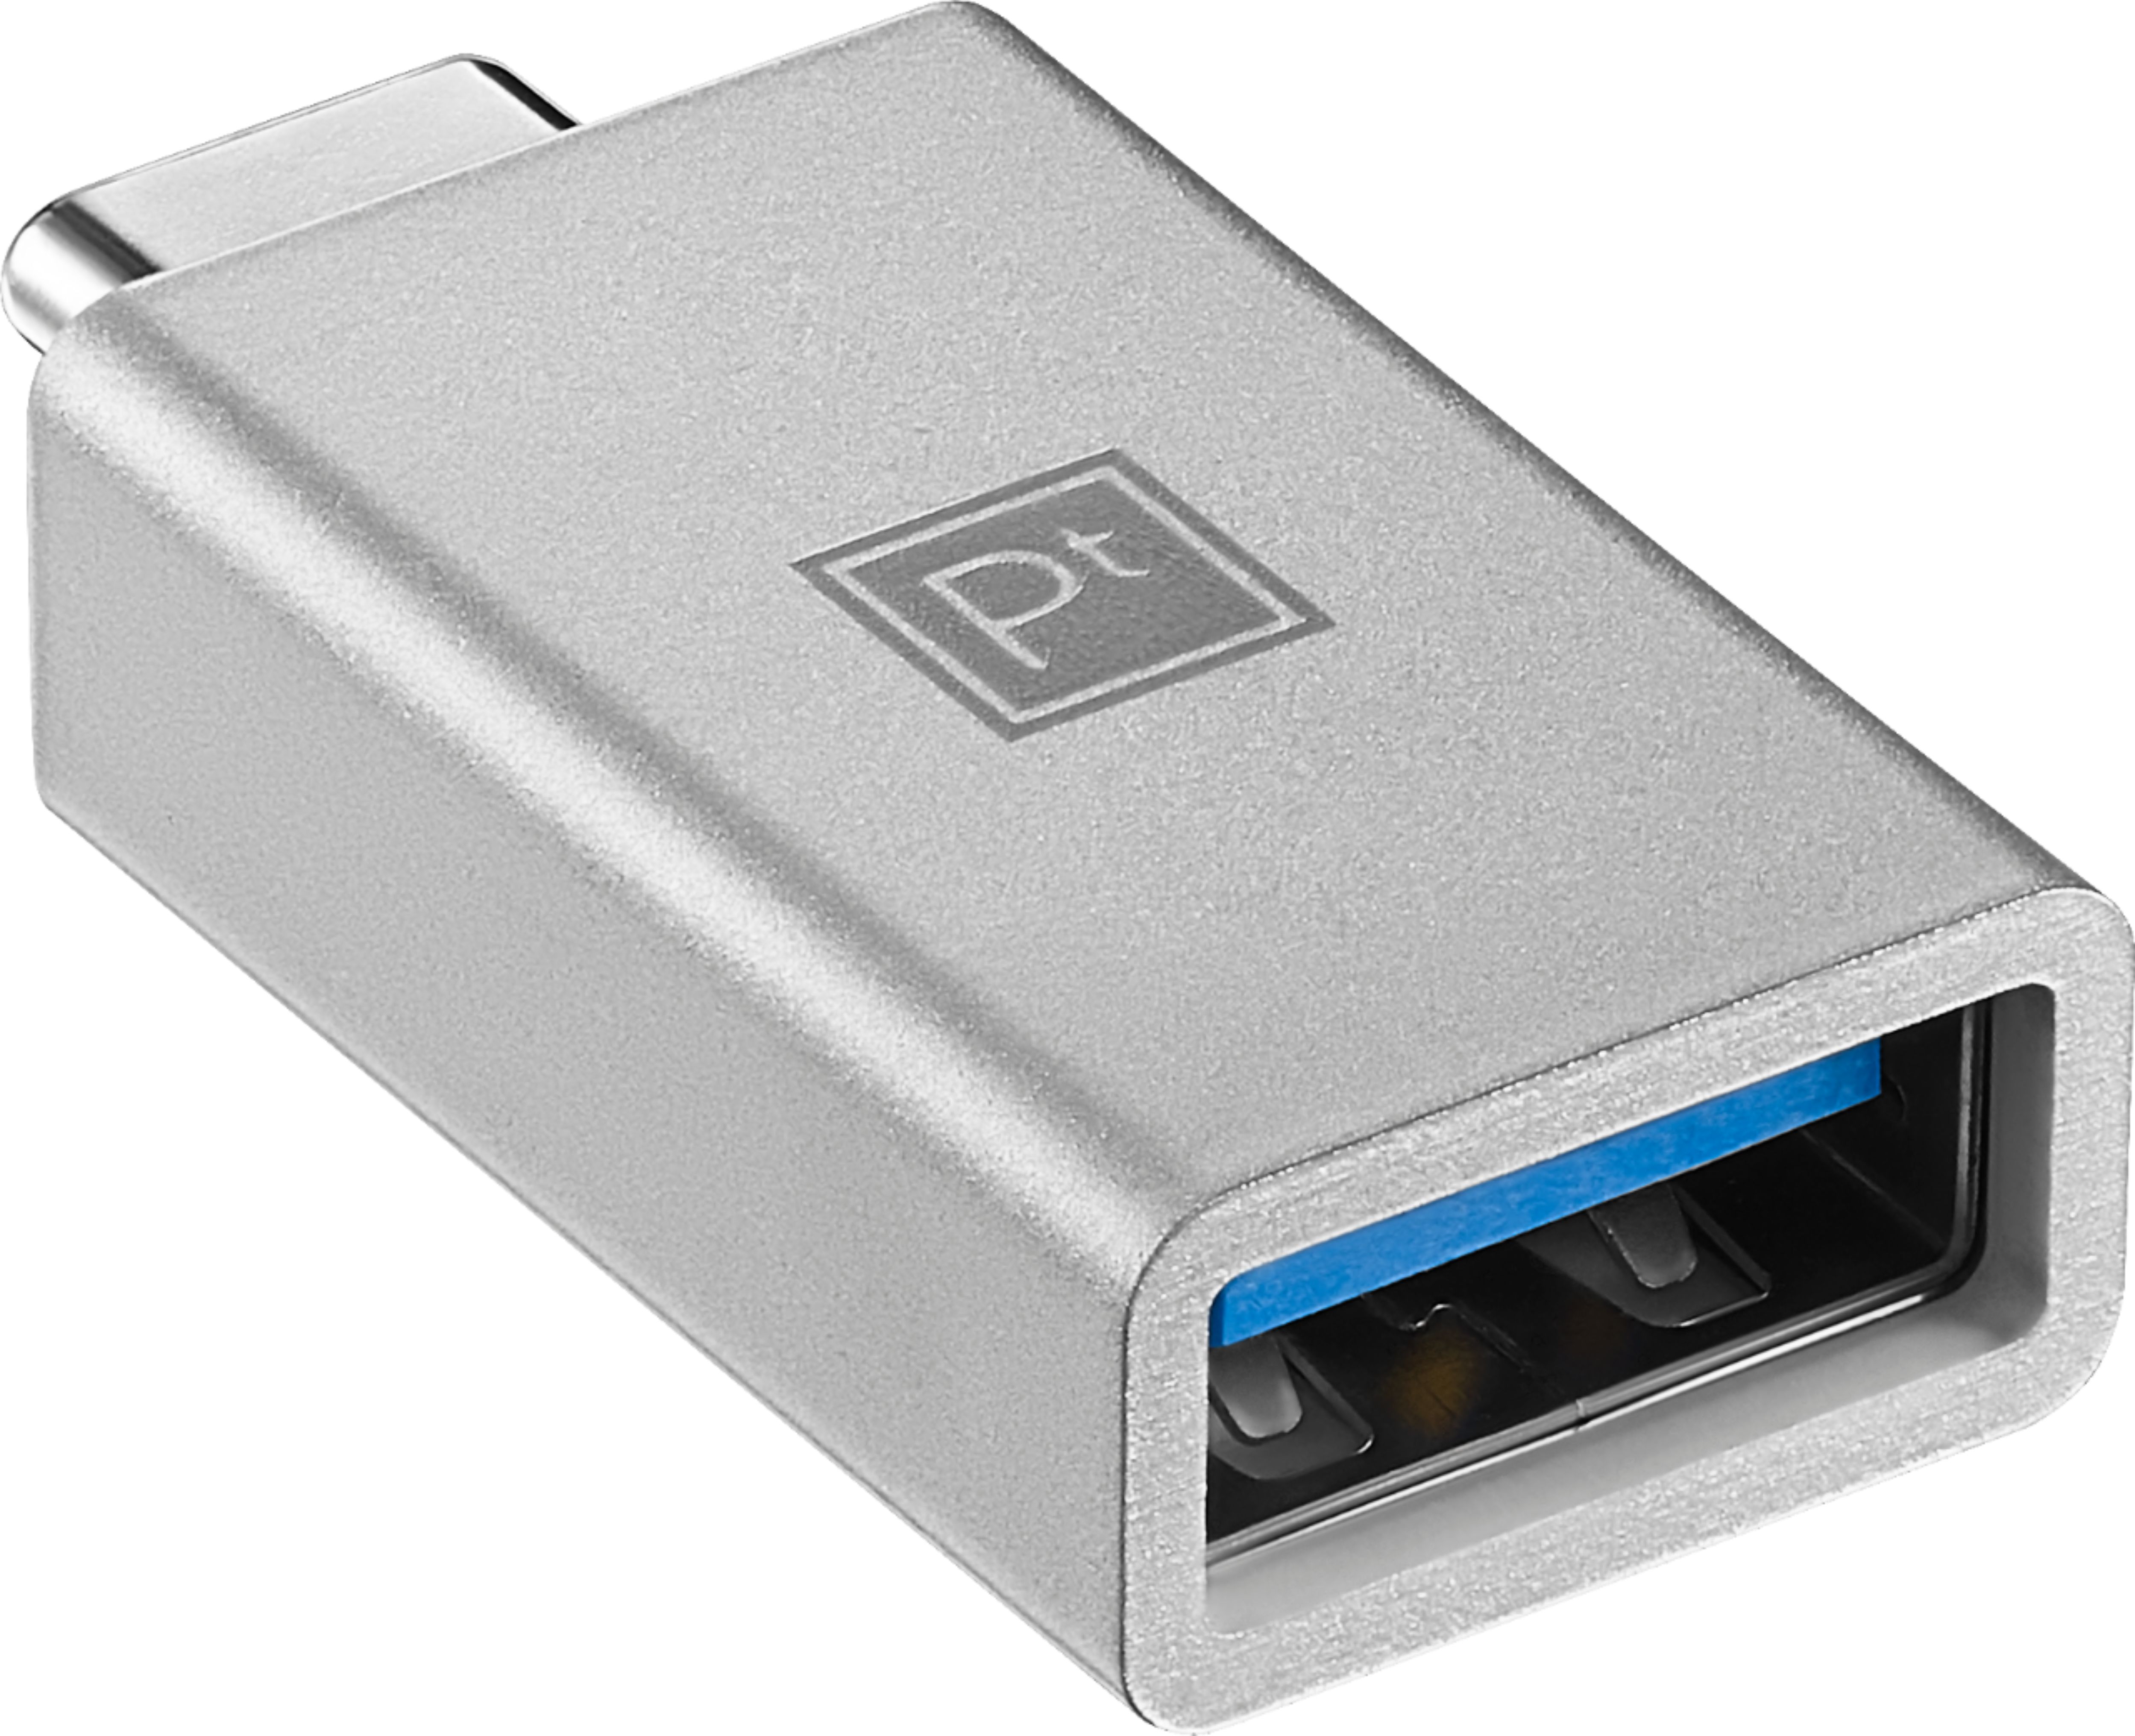 Identiteit etiquette contrast Platinum™ USB A to USB C Adapter, USB 3.0 Spec Gray PT-PACA - Best Buy